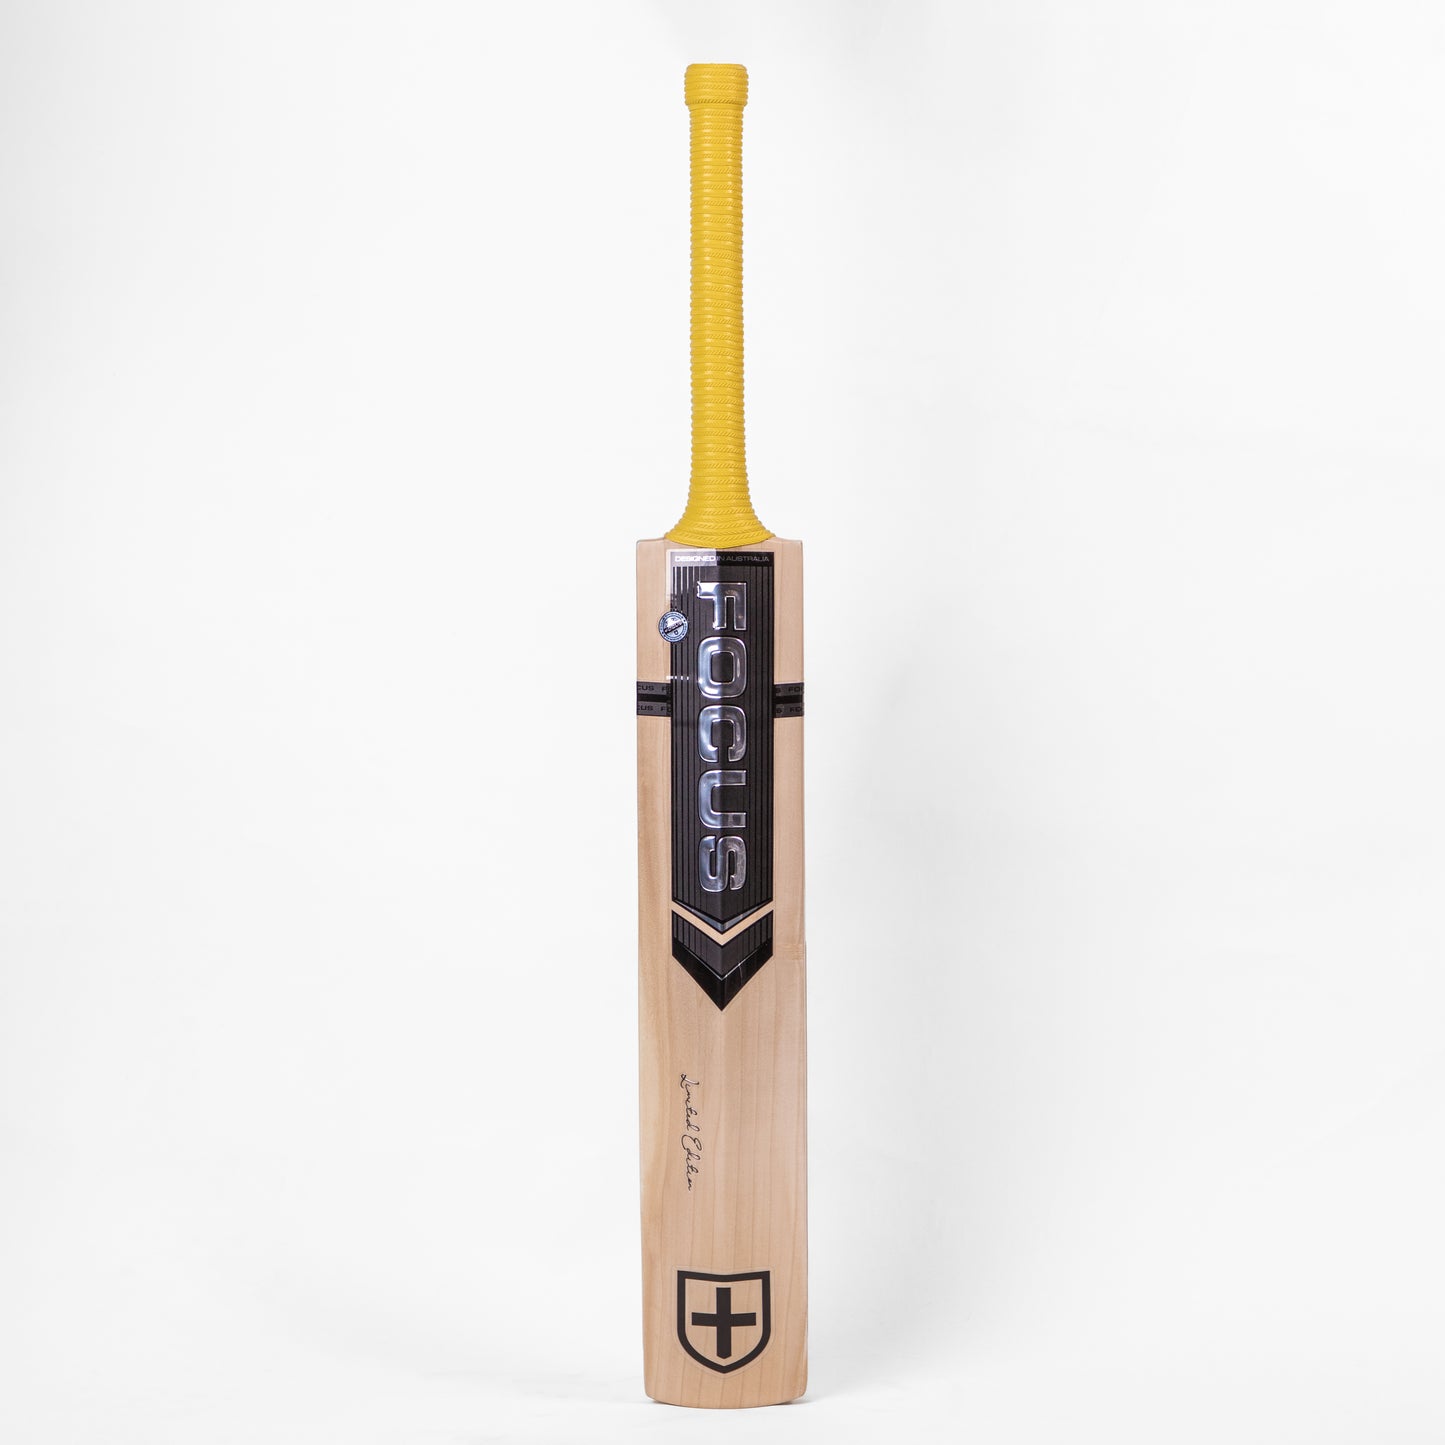 Focus RAW Cricket Bat - Full Size